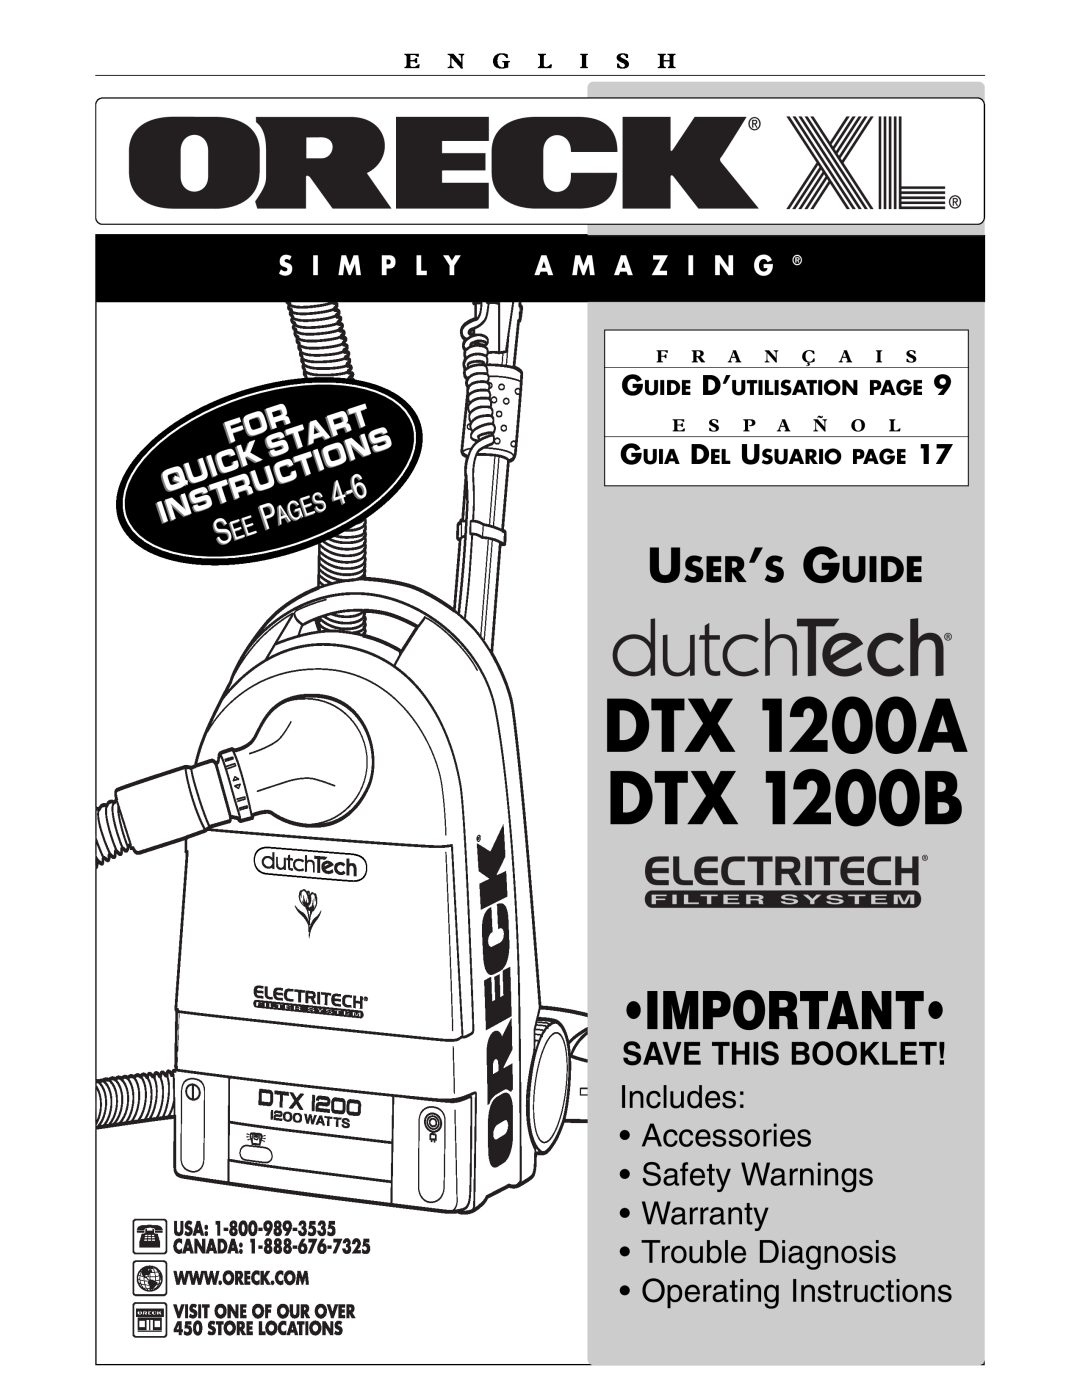 Oreck DTX 1200A quick start User’S Guide, S I M P L Y, A M A Z I N G, Guide D’Utilisation Page, Guia, Del Usuario Page 